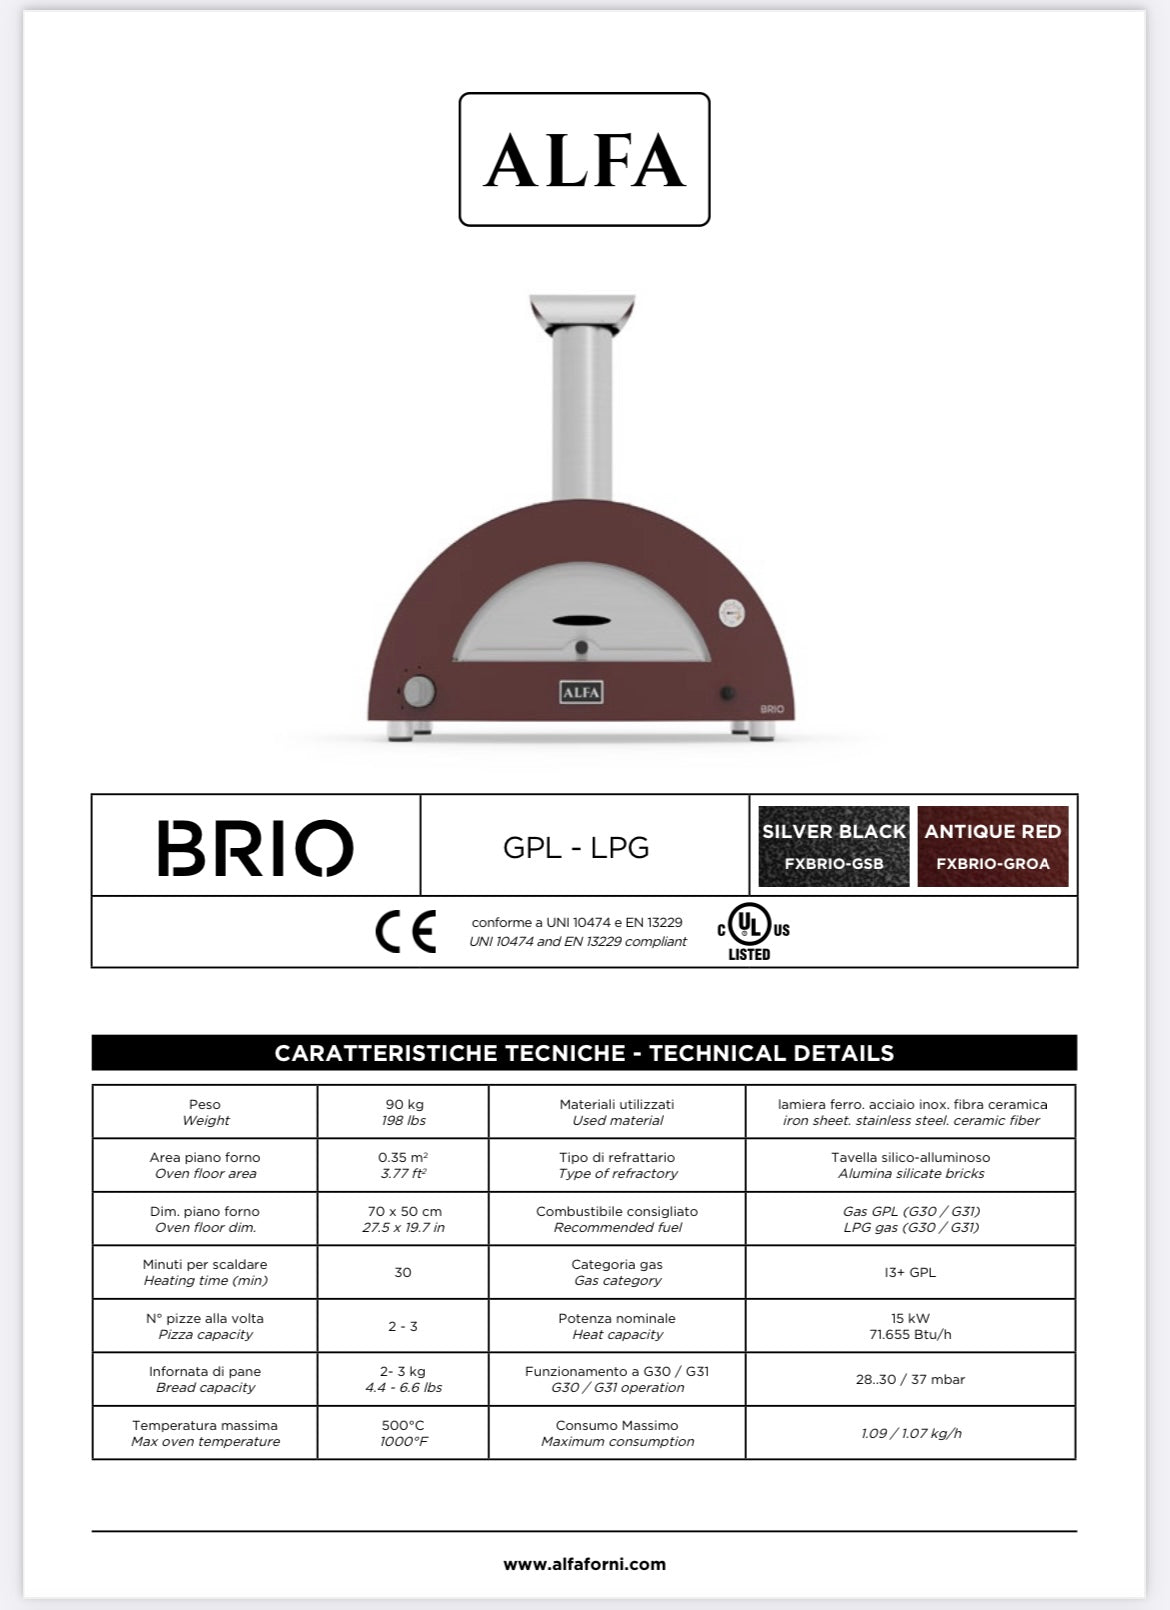 ALFA Brio Gas/Wood Pizza oven including hybrid